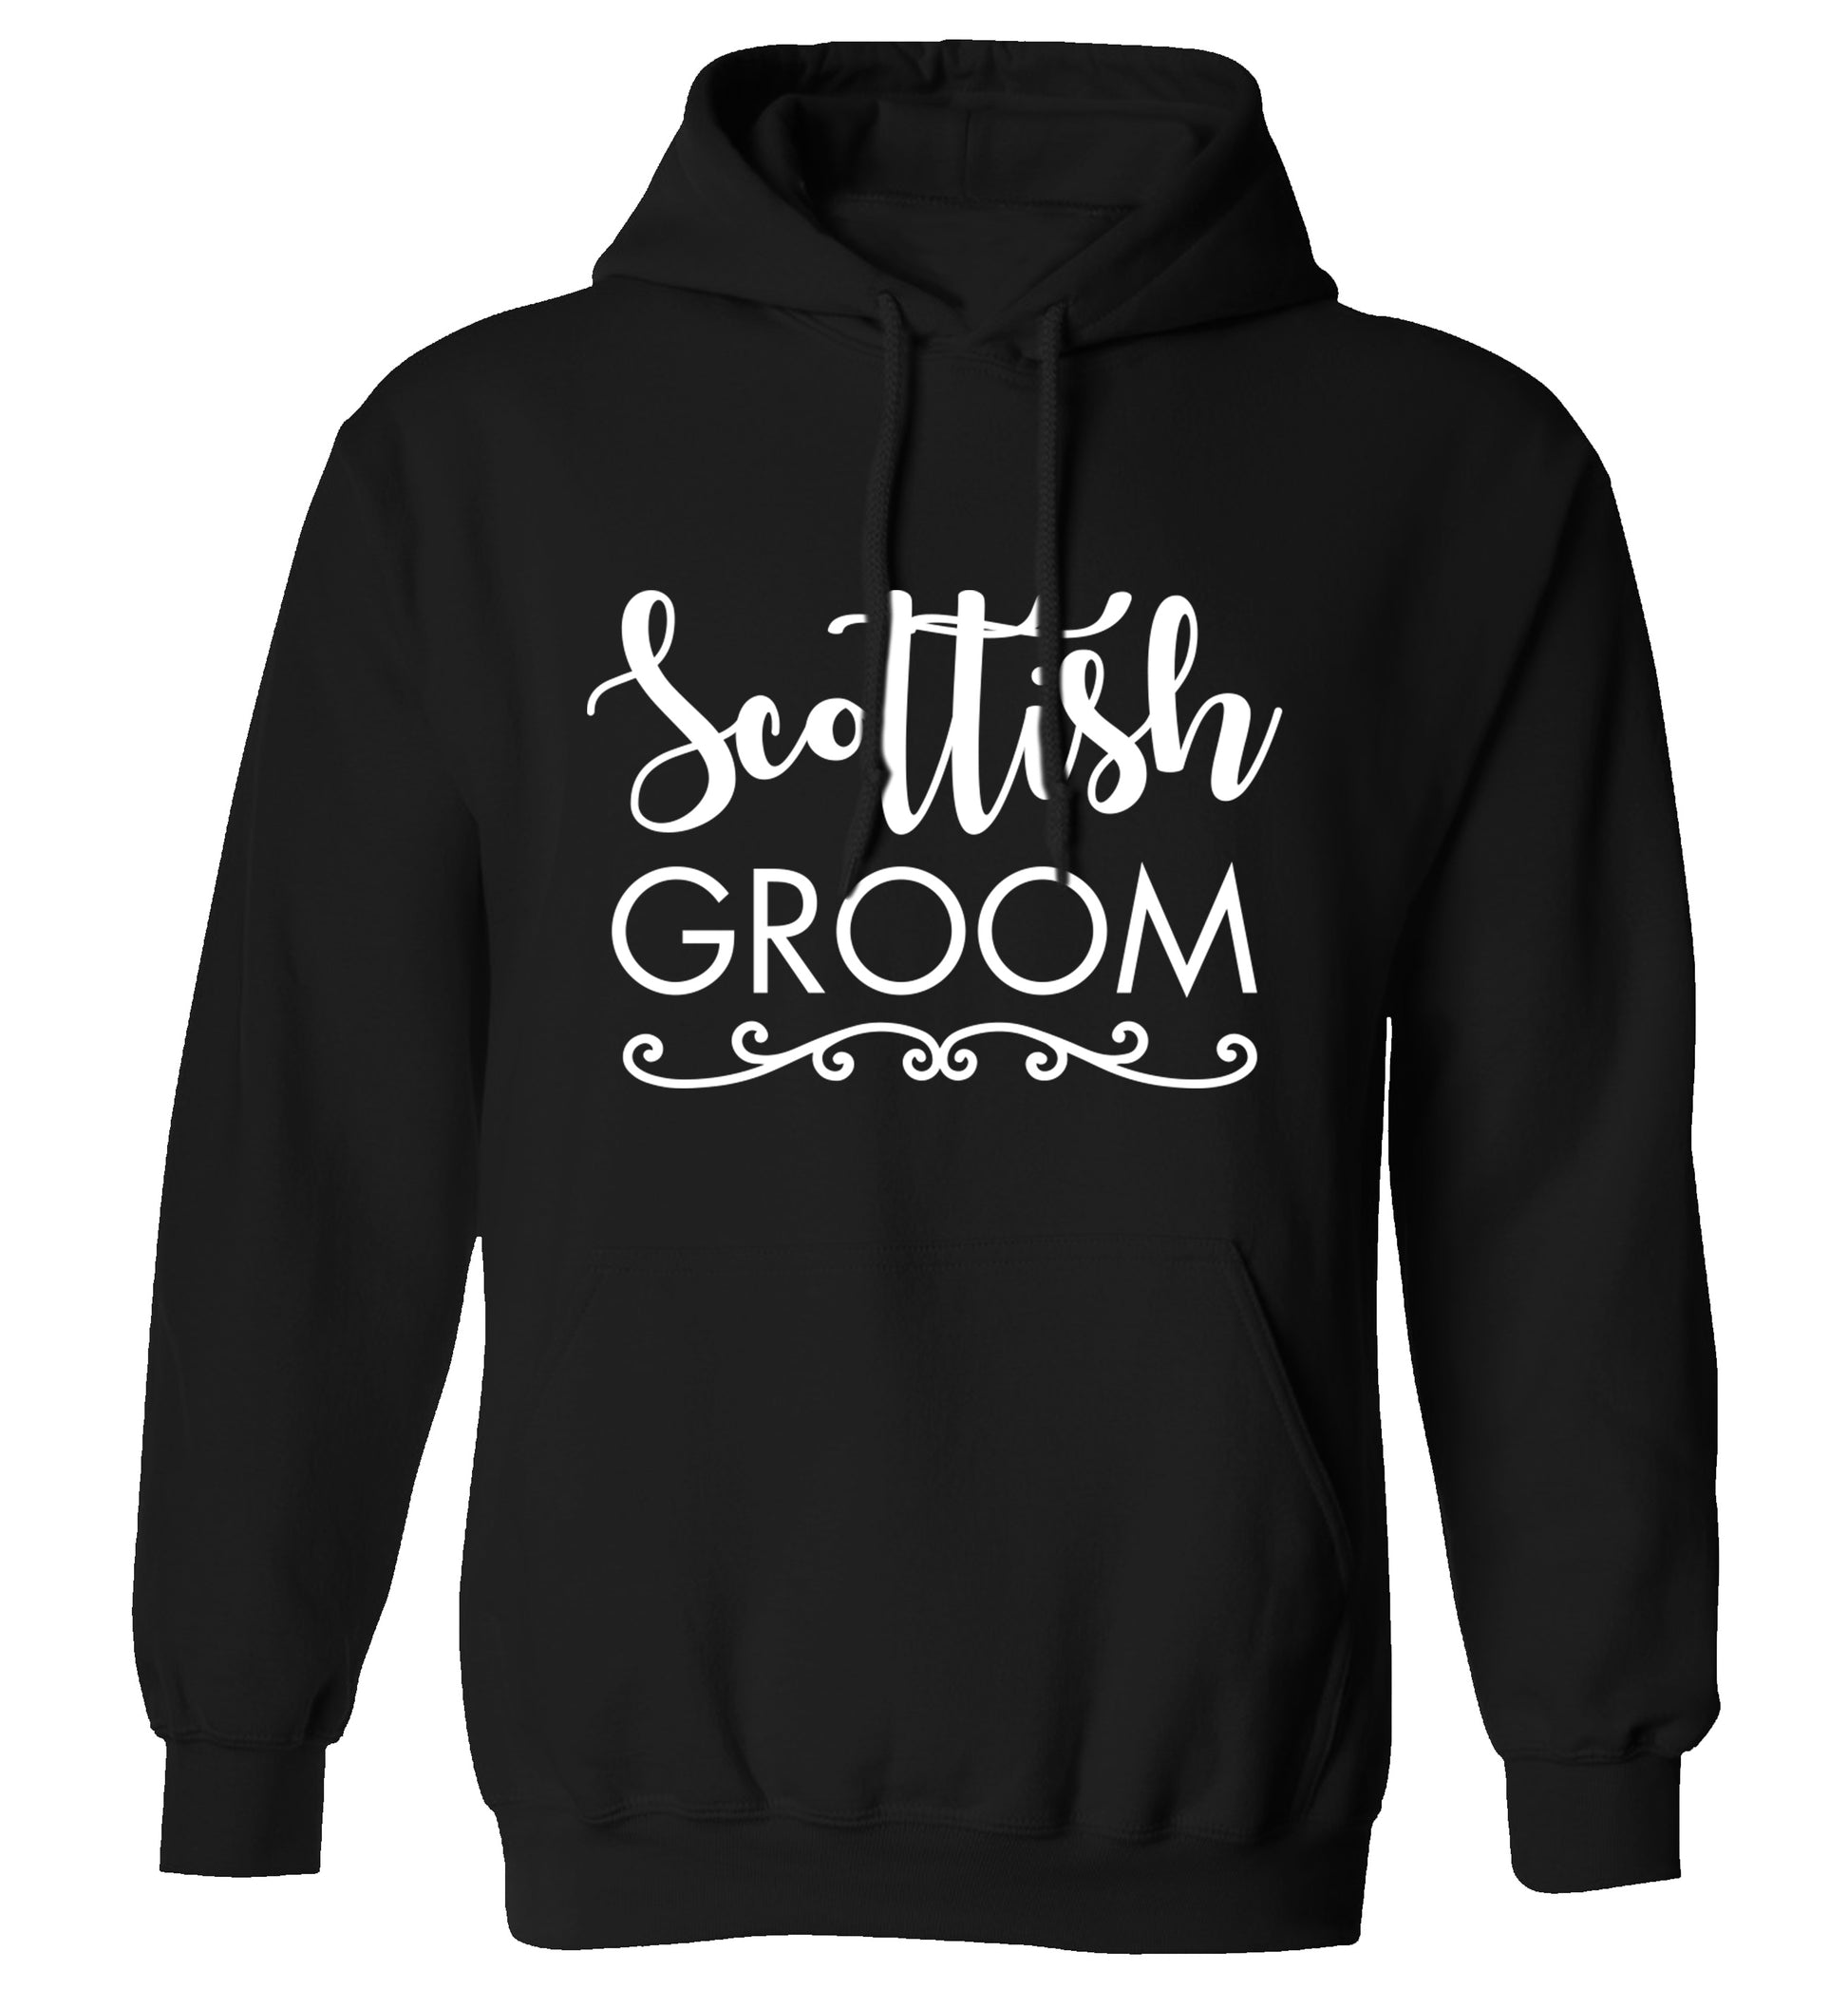 Scottish groom adults unisex black hoodie 2XL